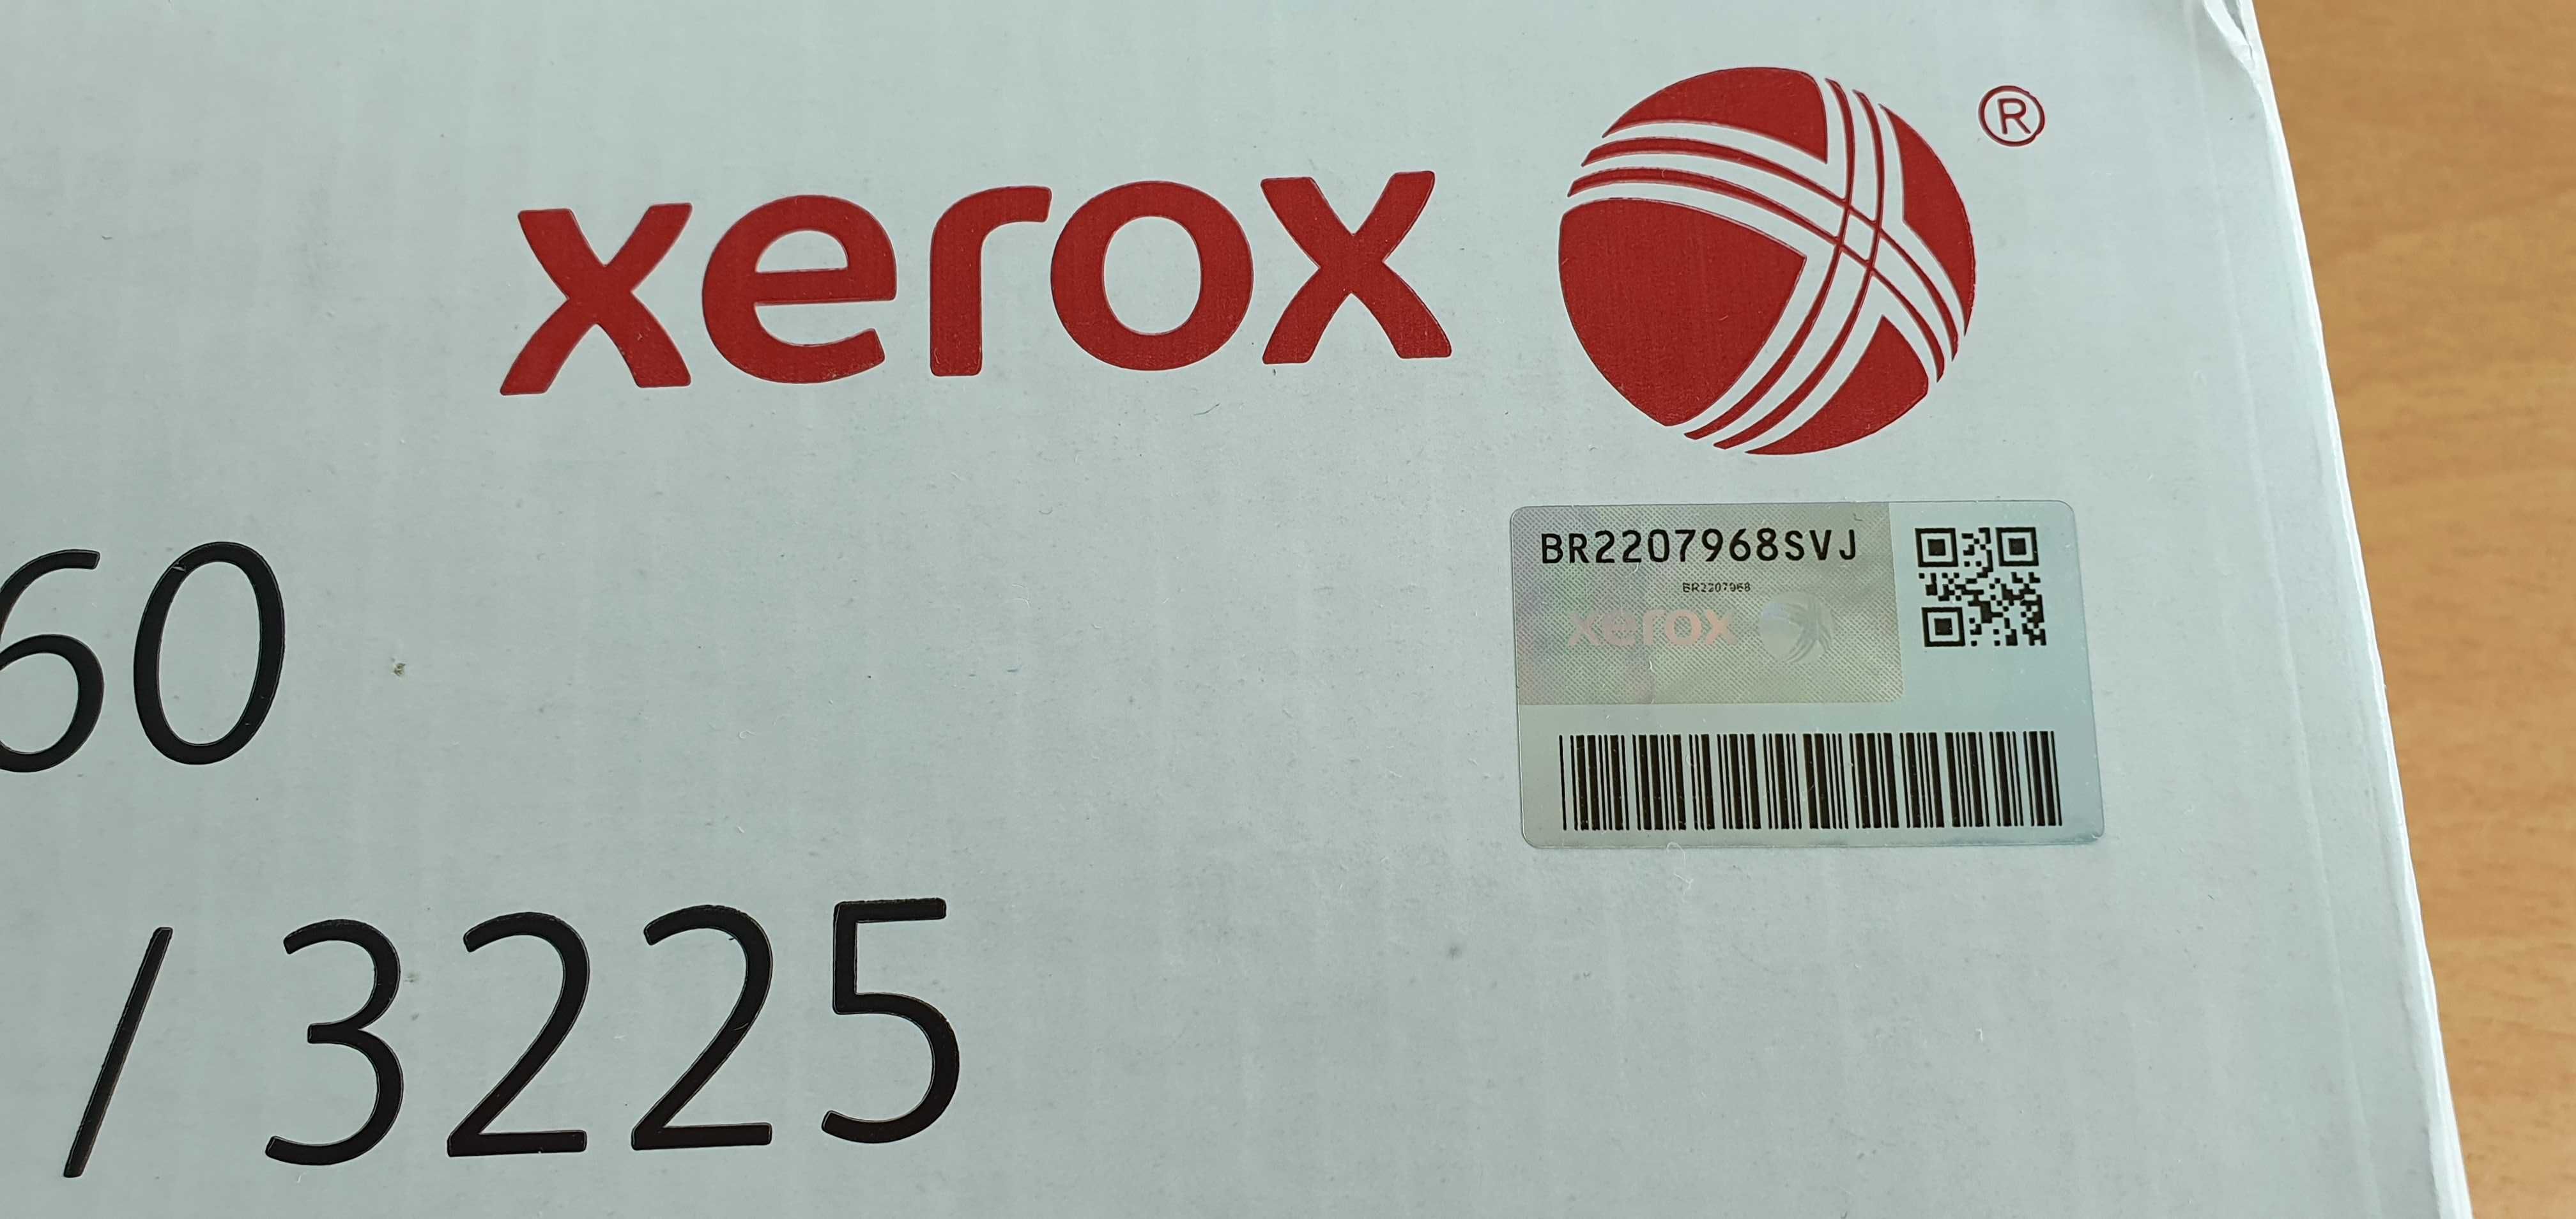 Xerox Phaser 3052 / 3260 Cartucho Tambor 101R00474 (NOVO)